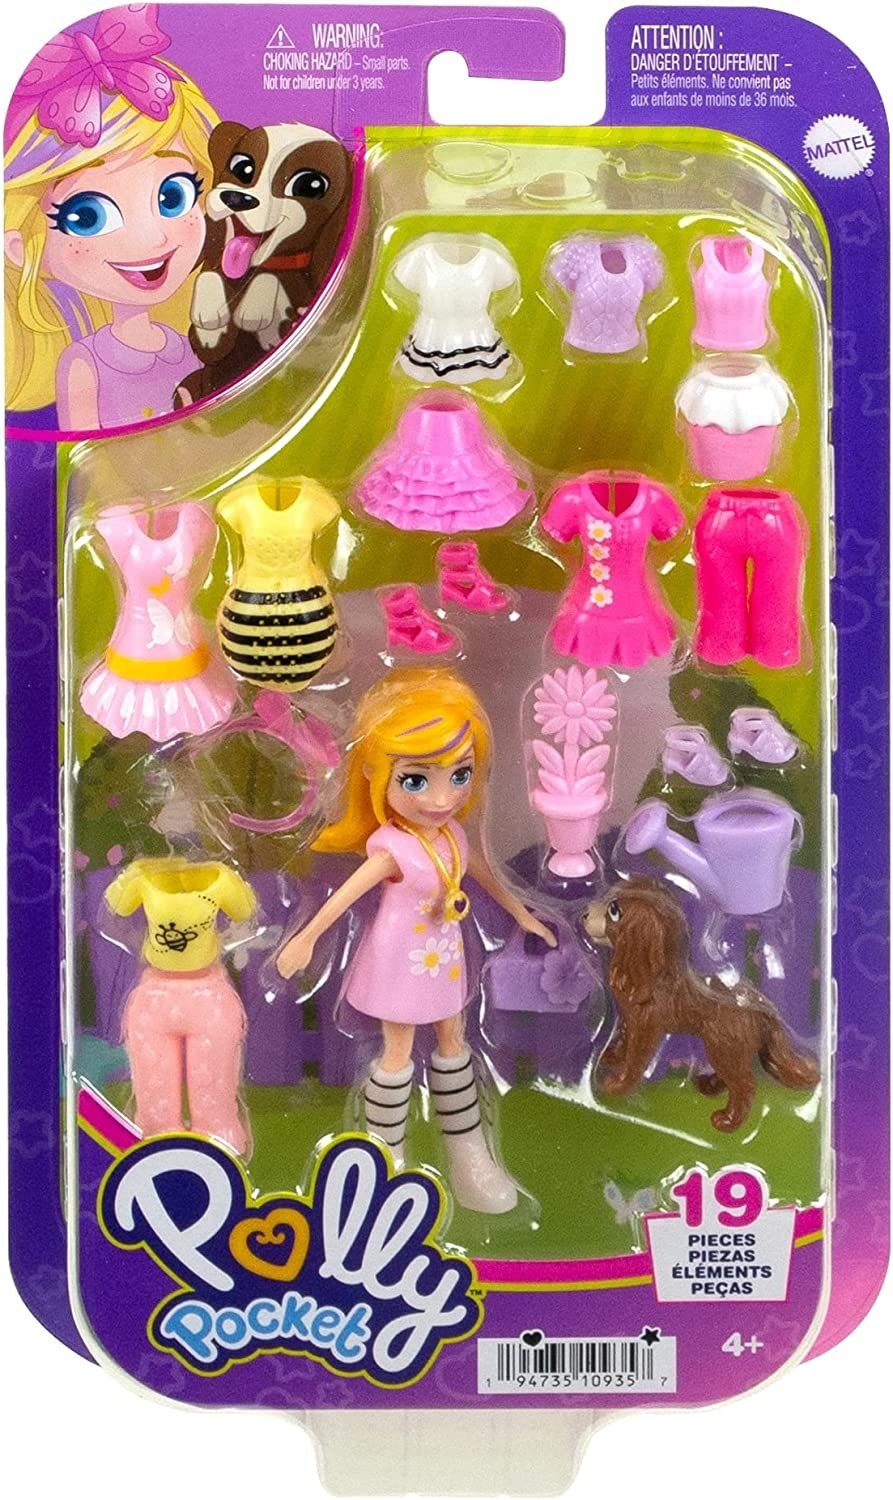 Fashion Polly Pocket Doll Figures Friends set